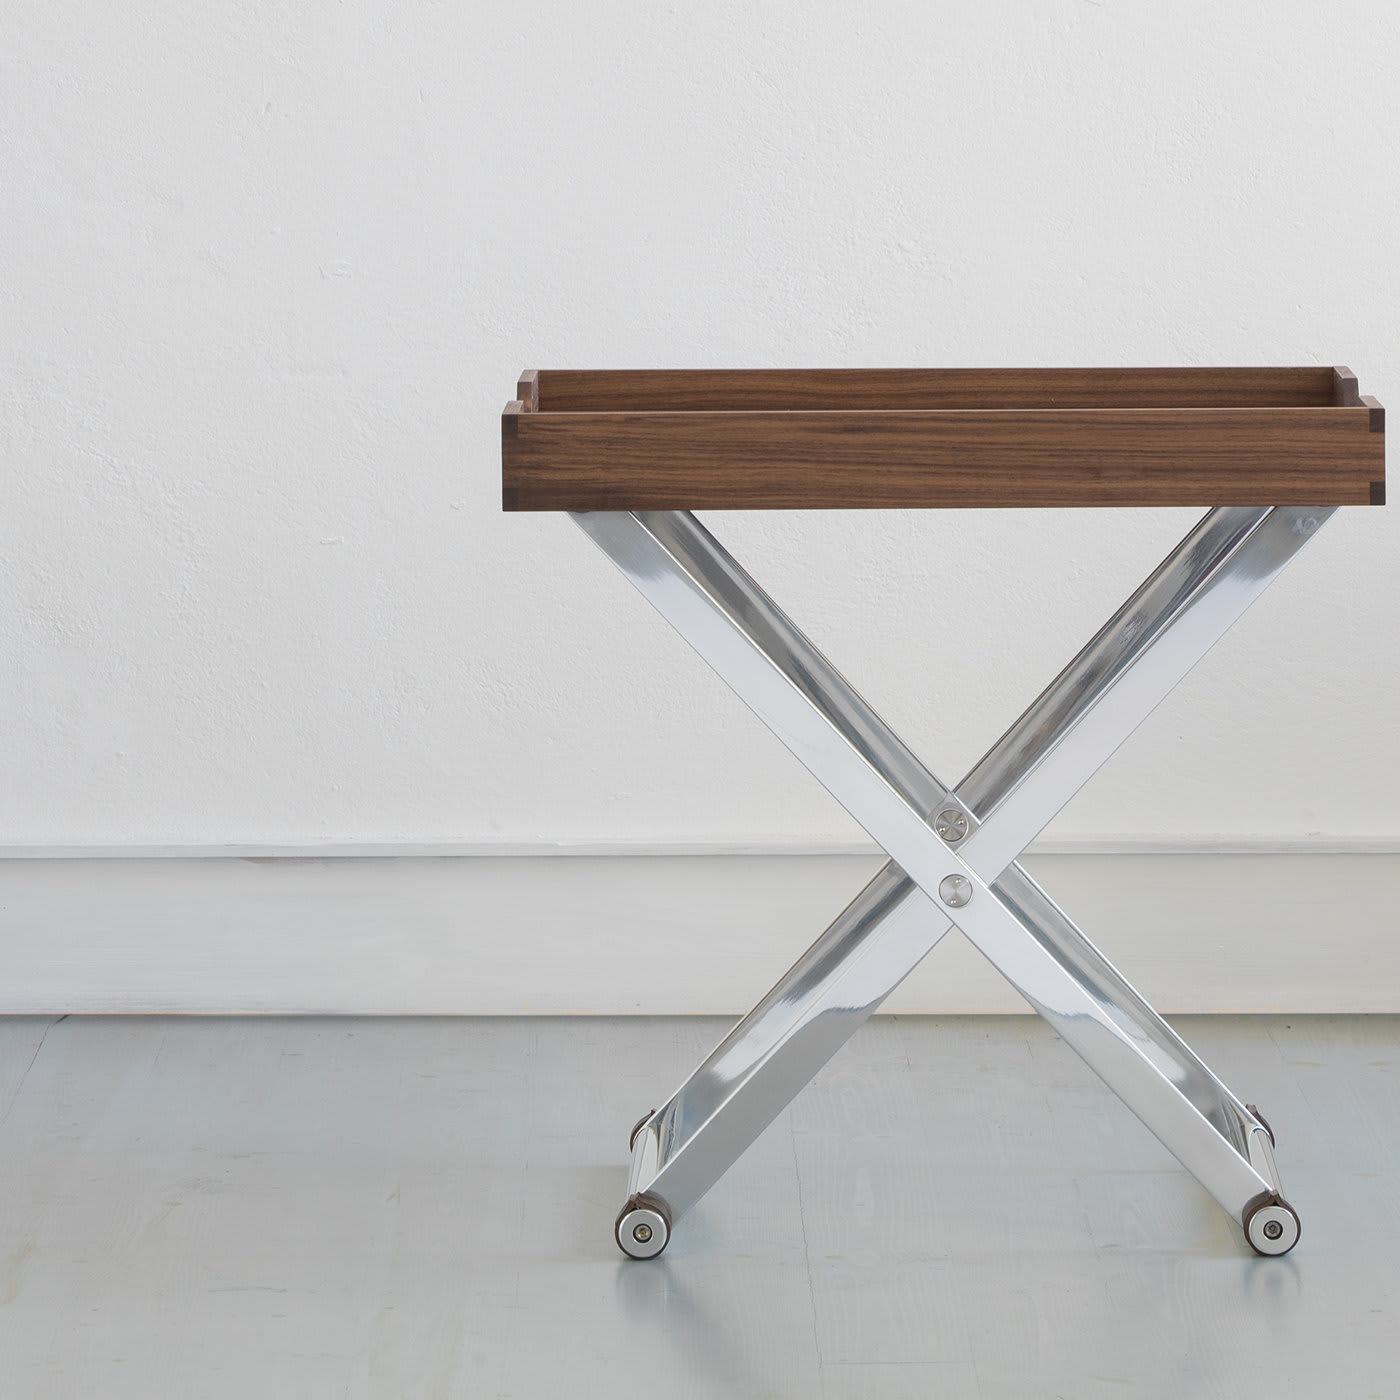 Andrea Foldable Table by Enrico Tonucci - Manifestodesign